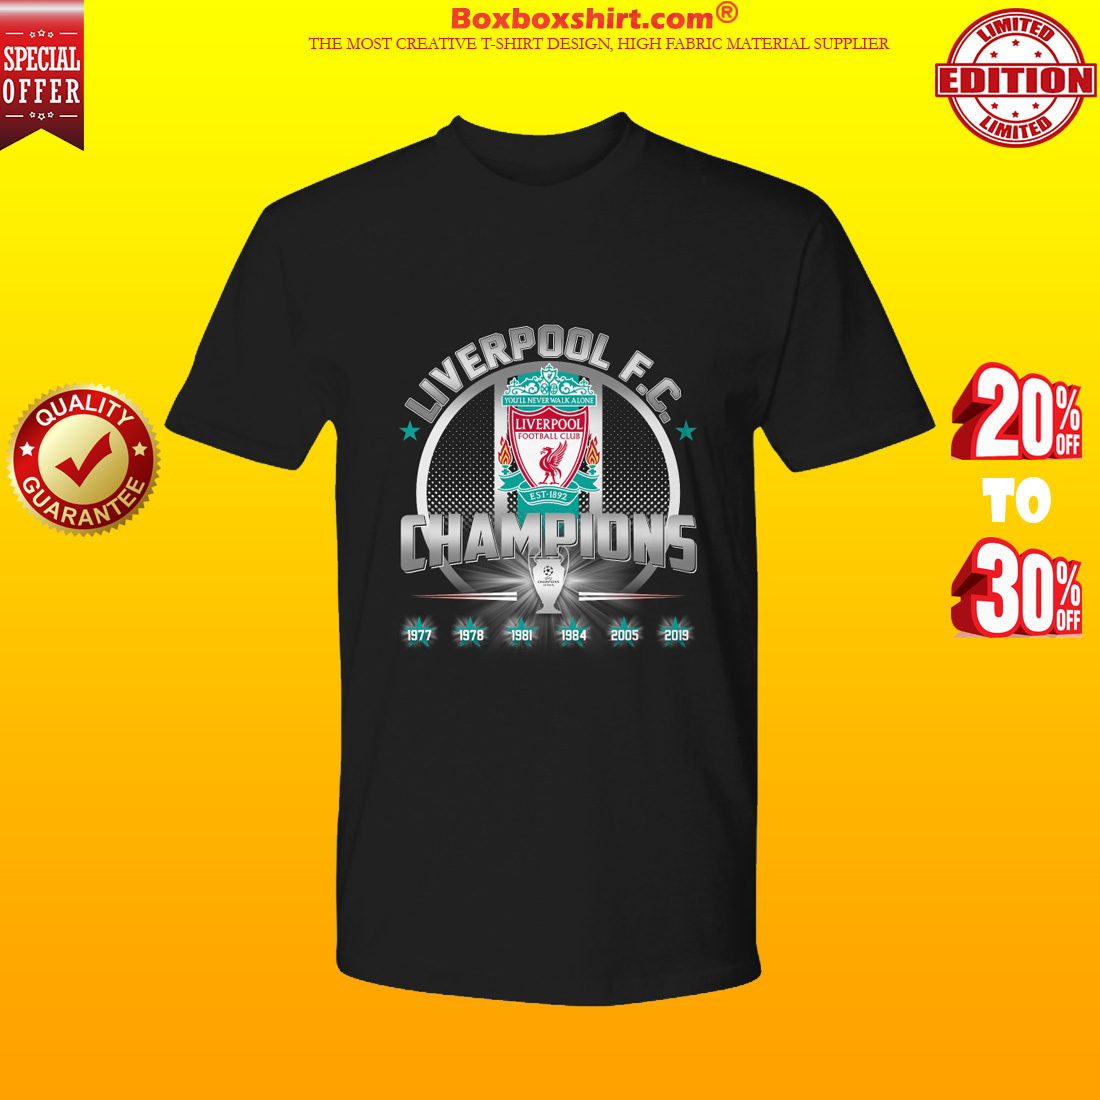 Liverpool FC Champions 2019 premium tee shirt